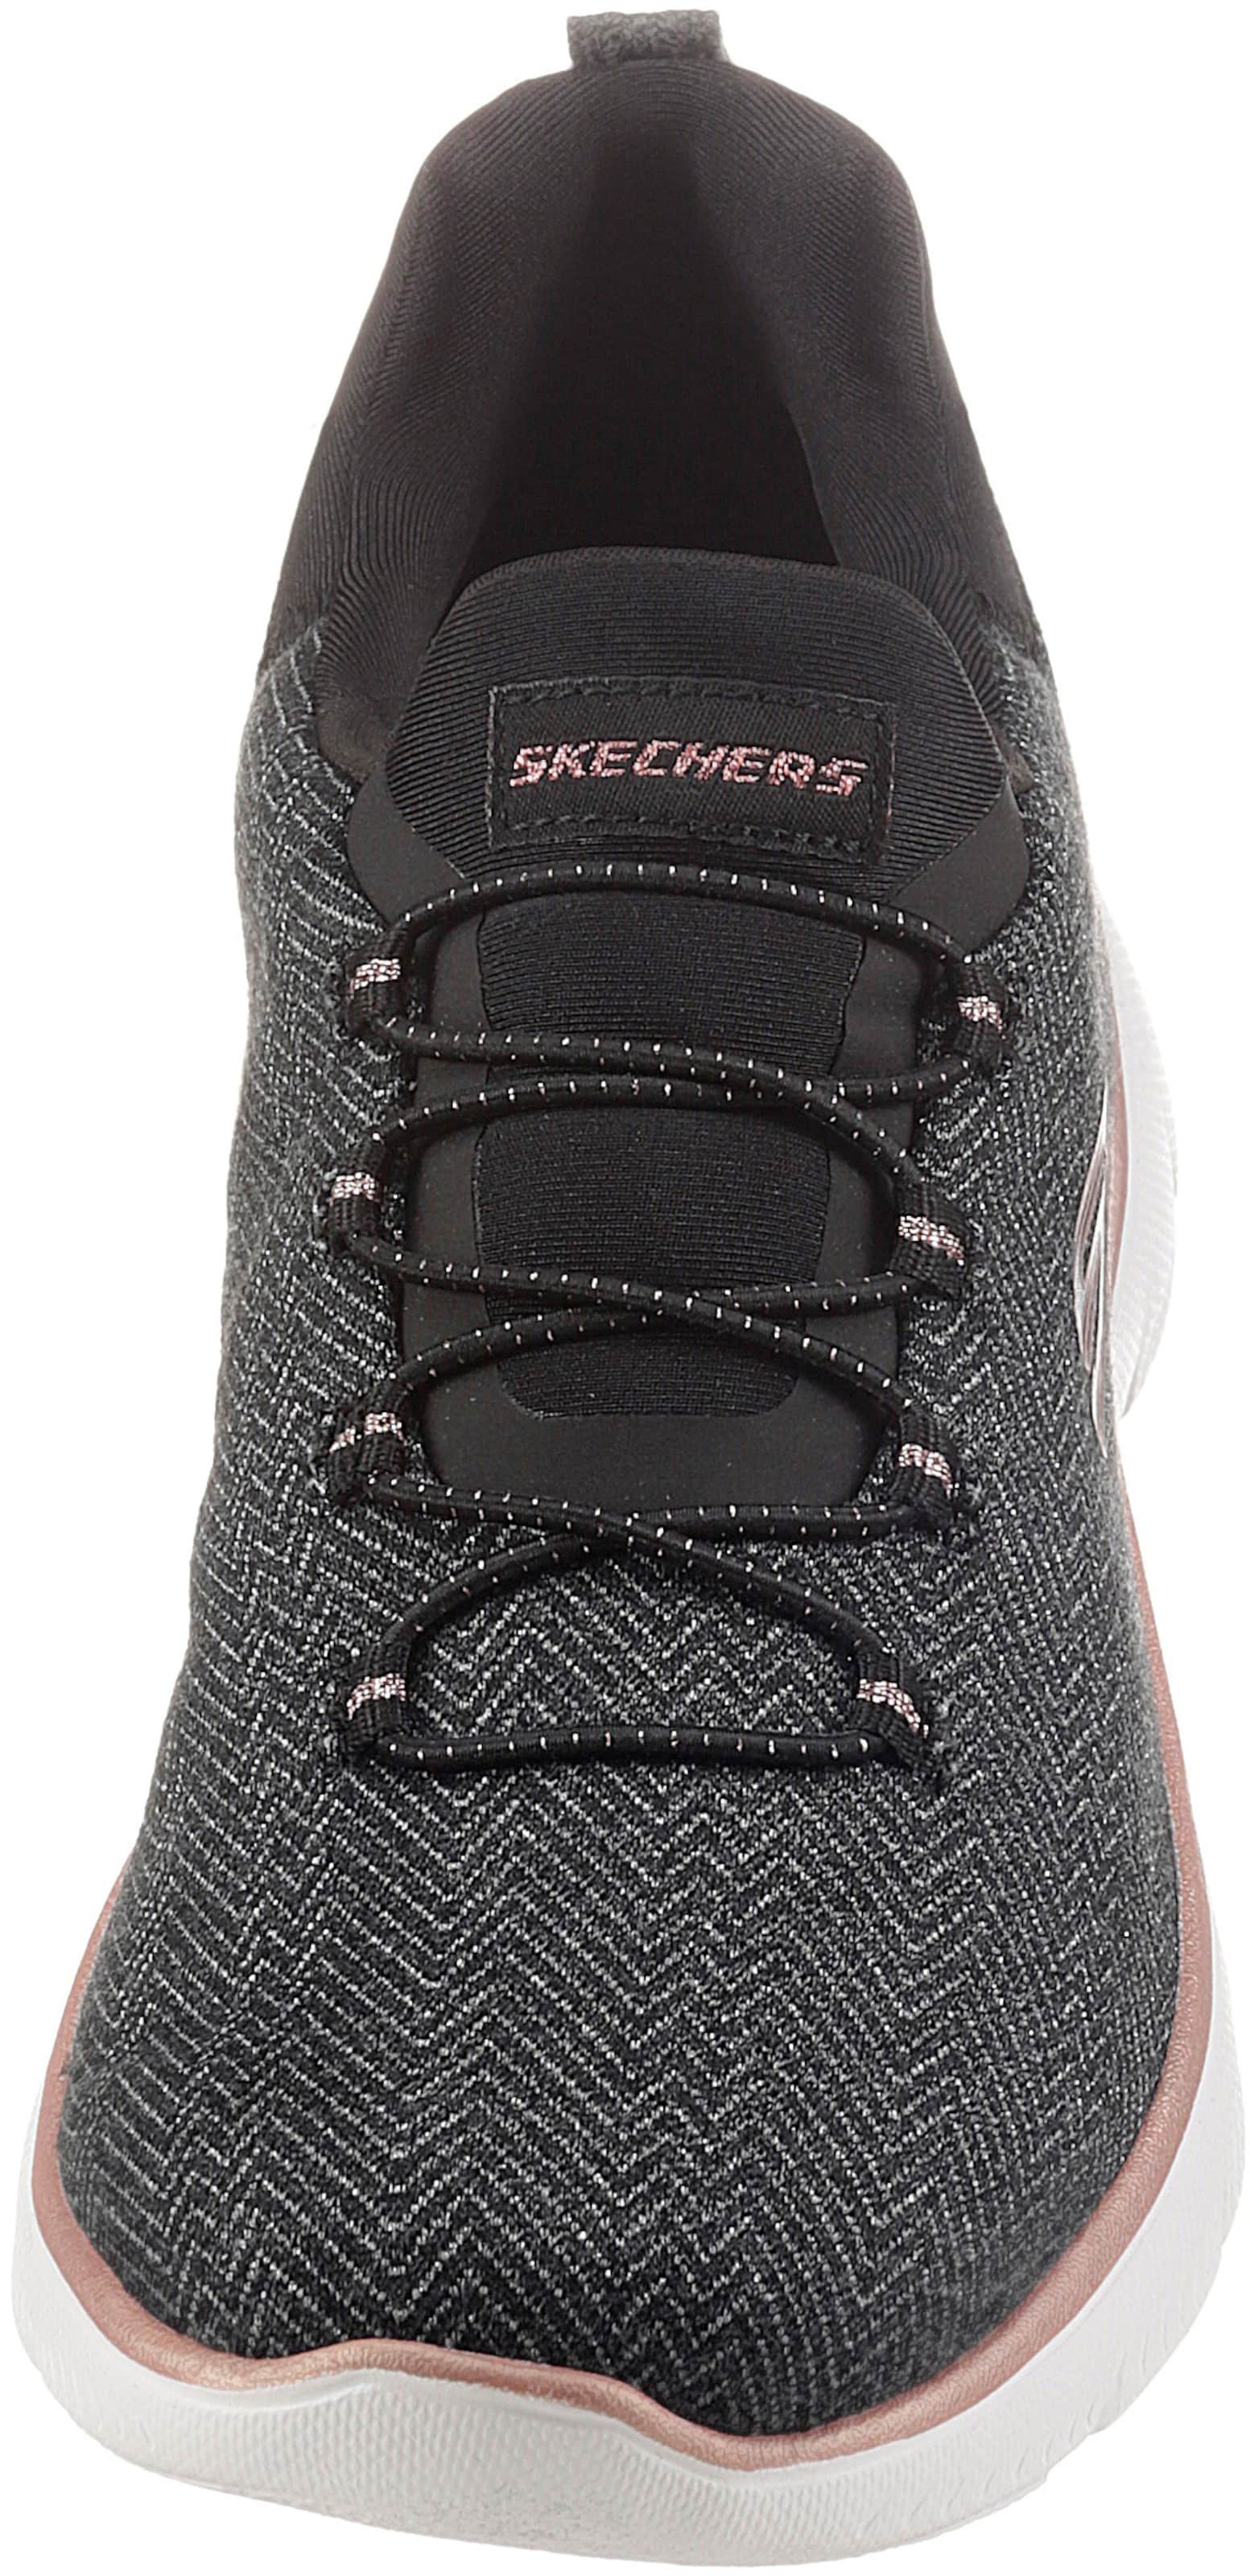 CD von günstig Kaufen-Slip-On Sneaker in schwarz-meliert von Skechers. Slip-On Sneaker in schwarz-meliert von Skechers <![CDATA[Slipper, Skechers, Textil-Synthetik kombiniert]]>. 